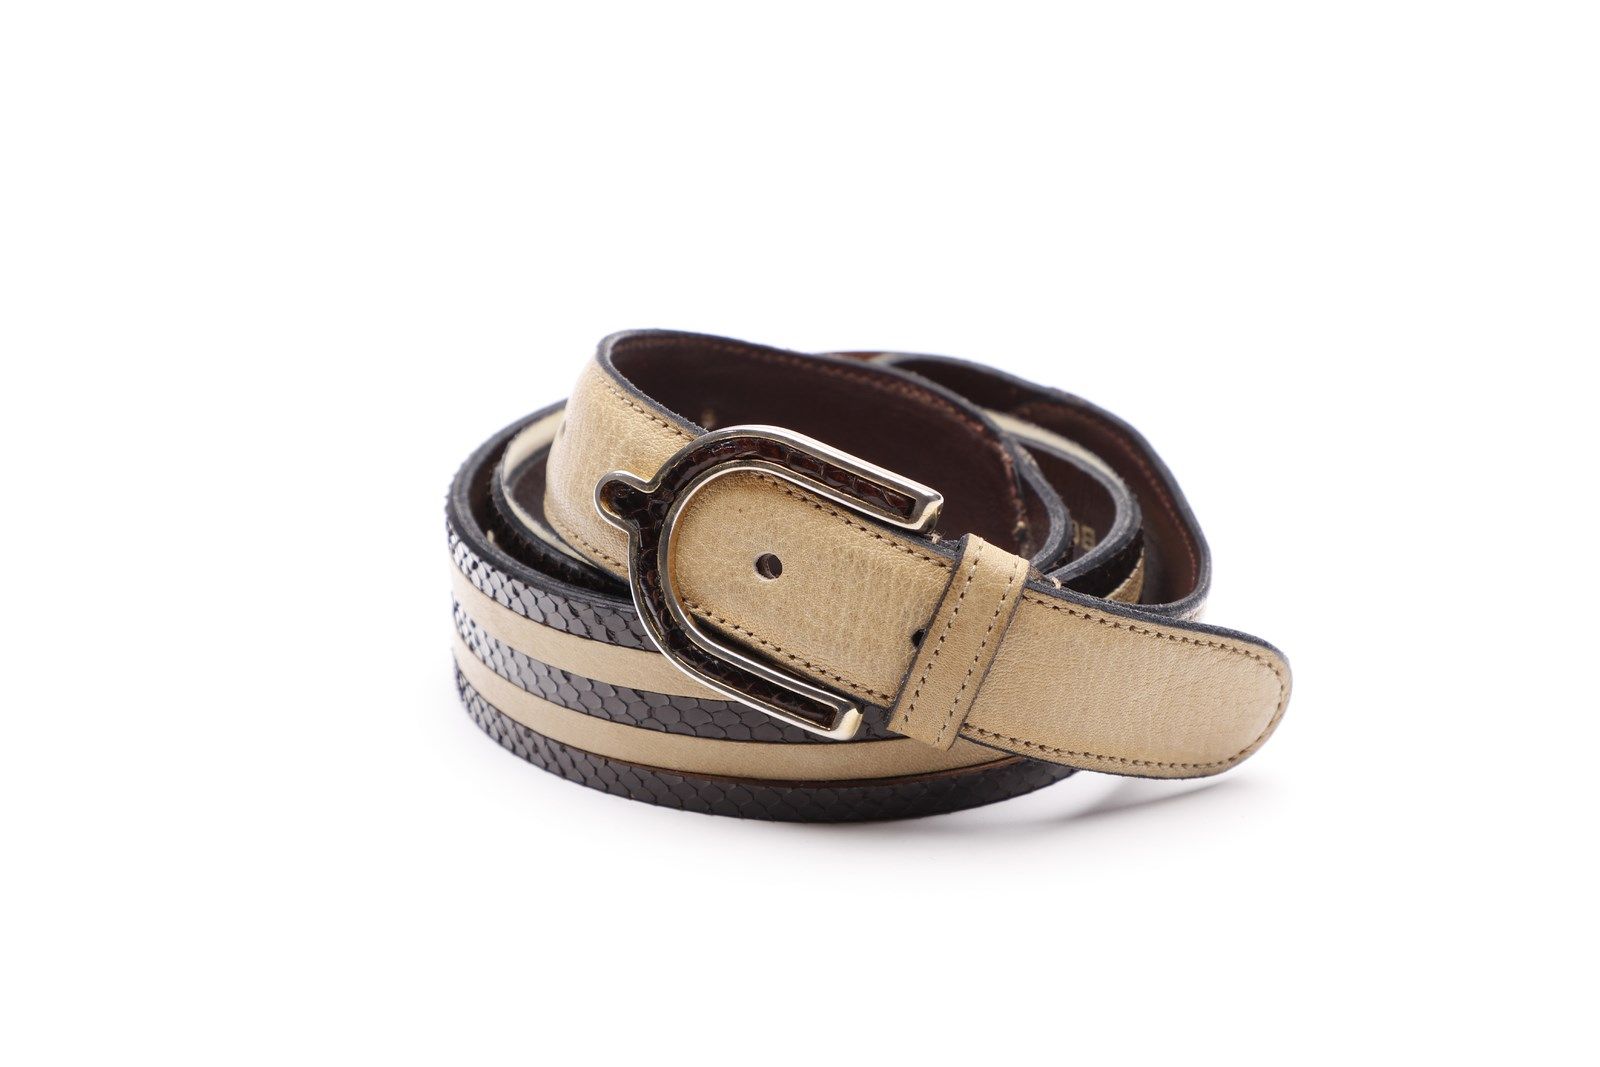 STUDIO BOJOLA Brown and beige leather belt. Cinturón de cuero marrón y beige. 19&hellip;